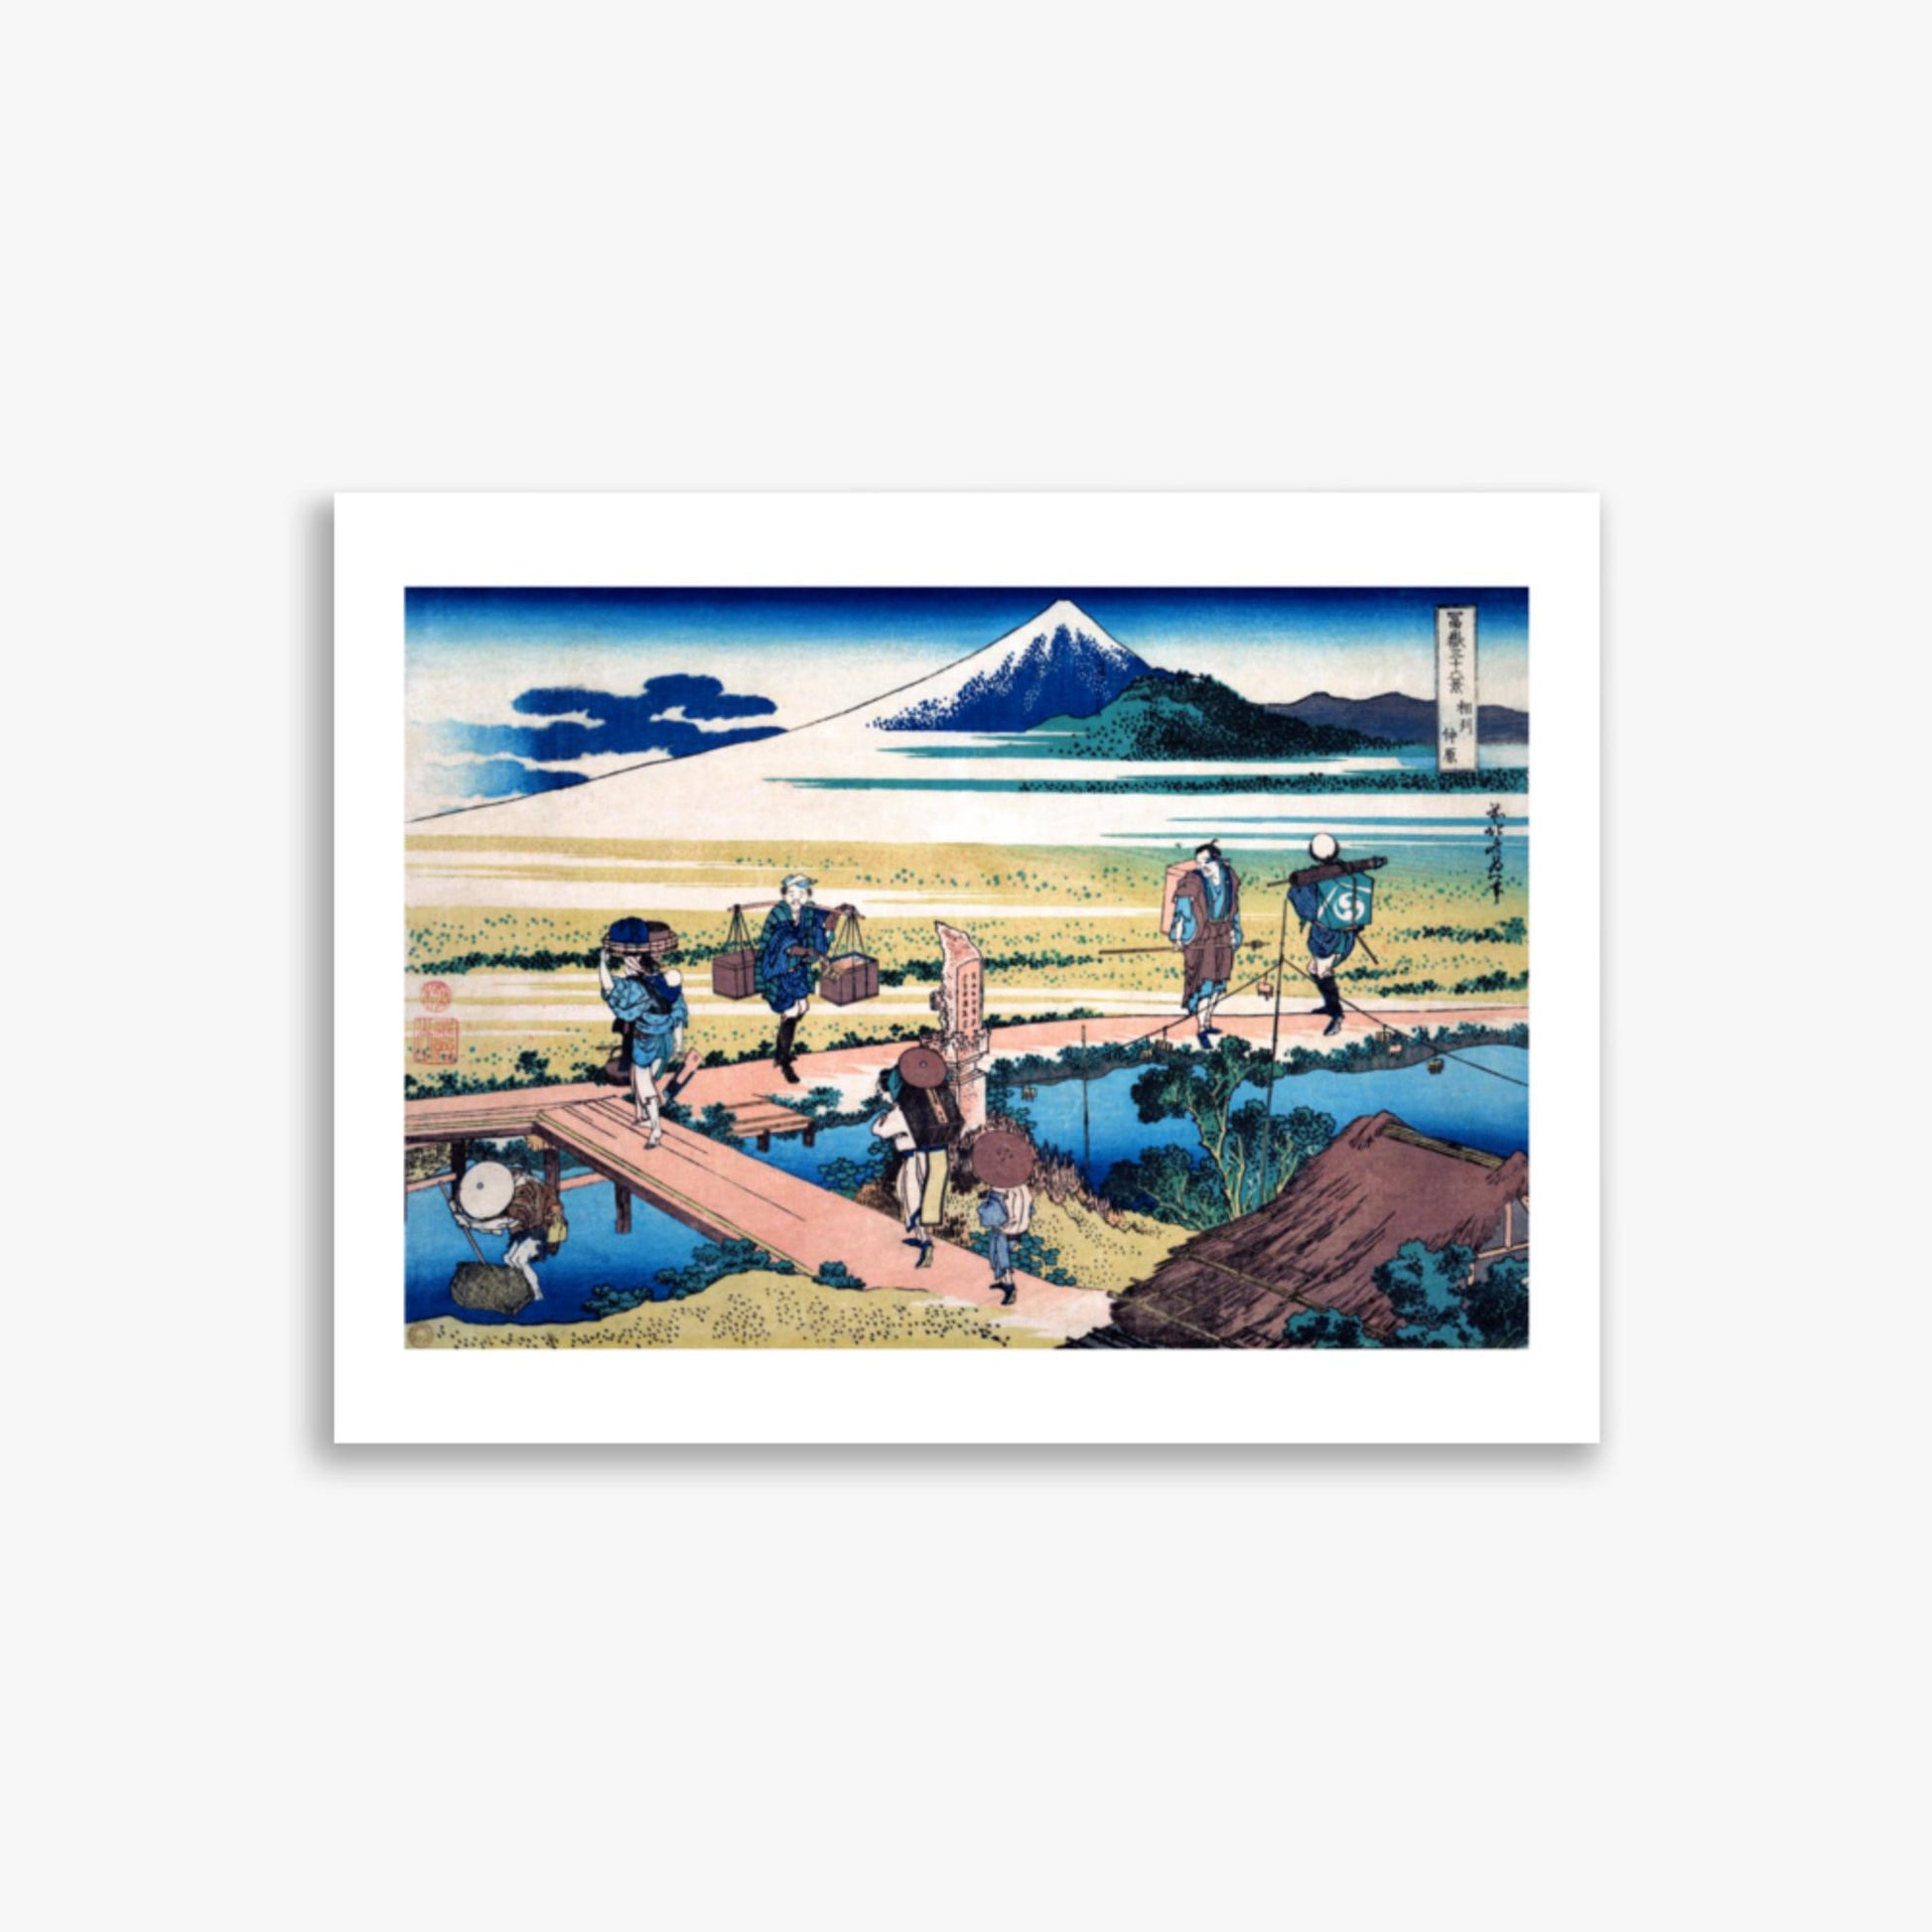 Katsushika Hokusai - Nakahara in Sagami Province 30x40 cm Poster